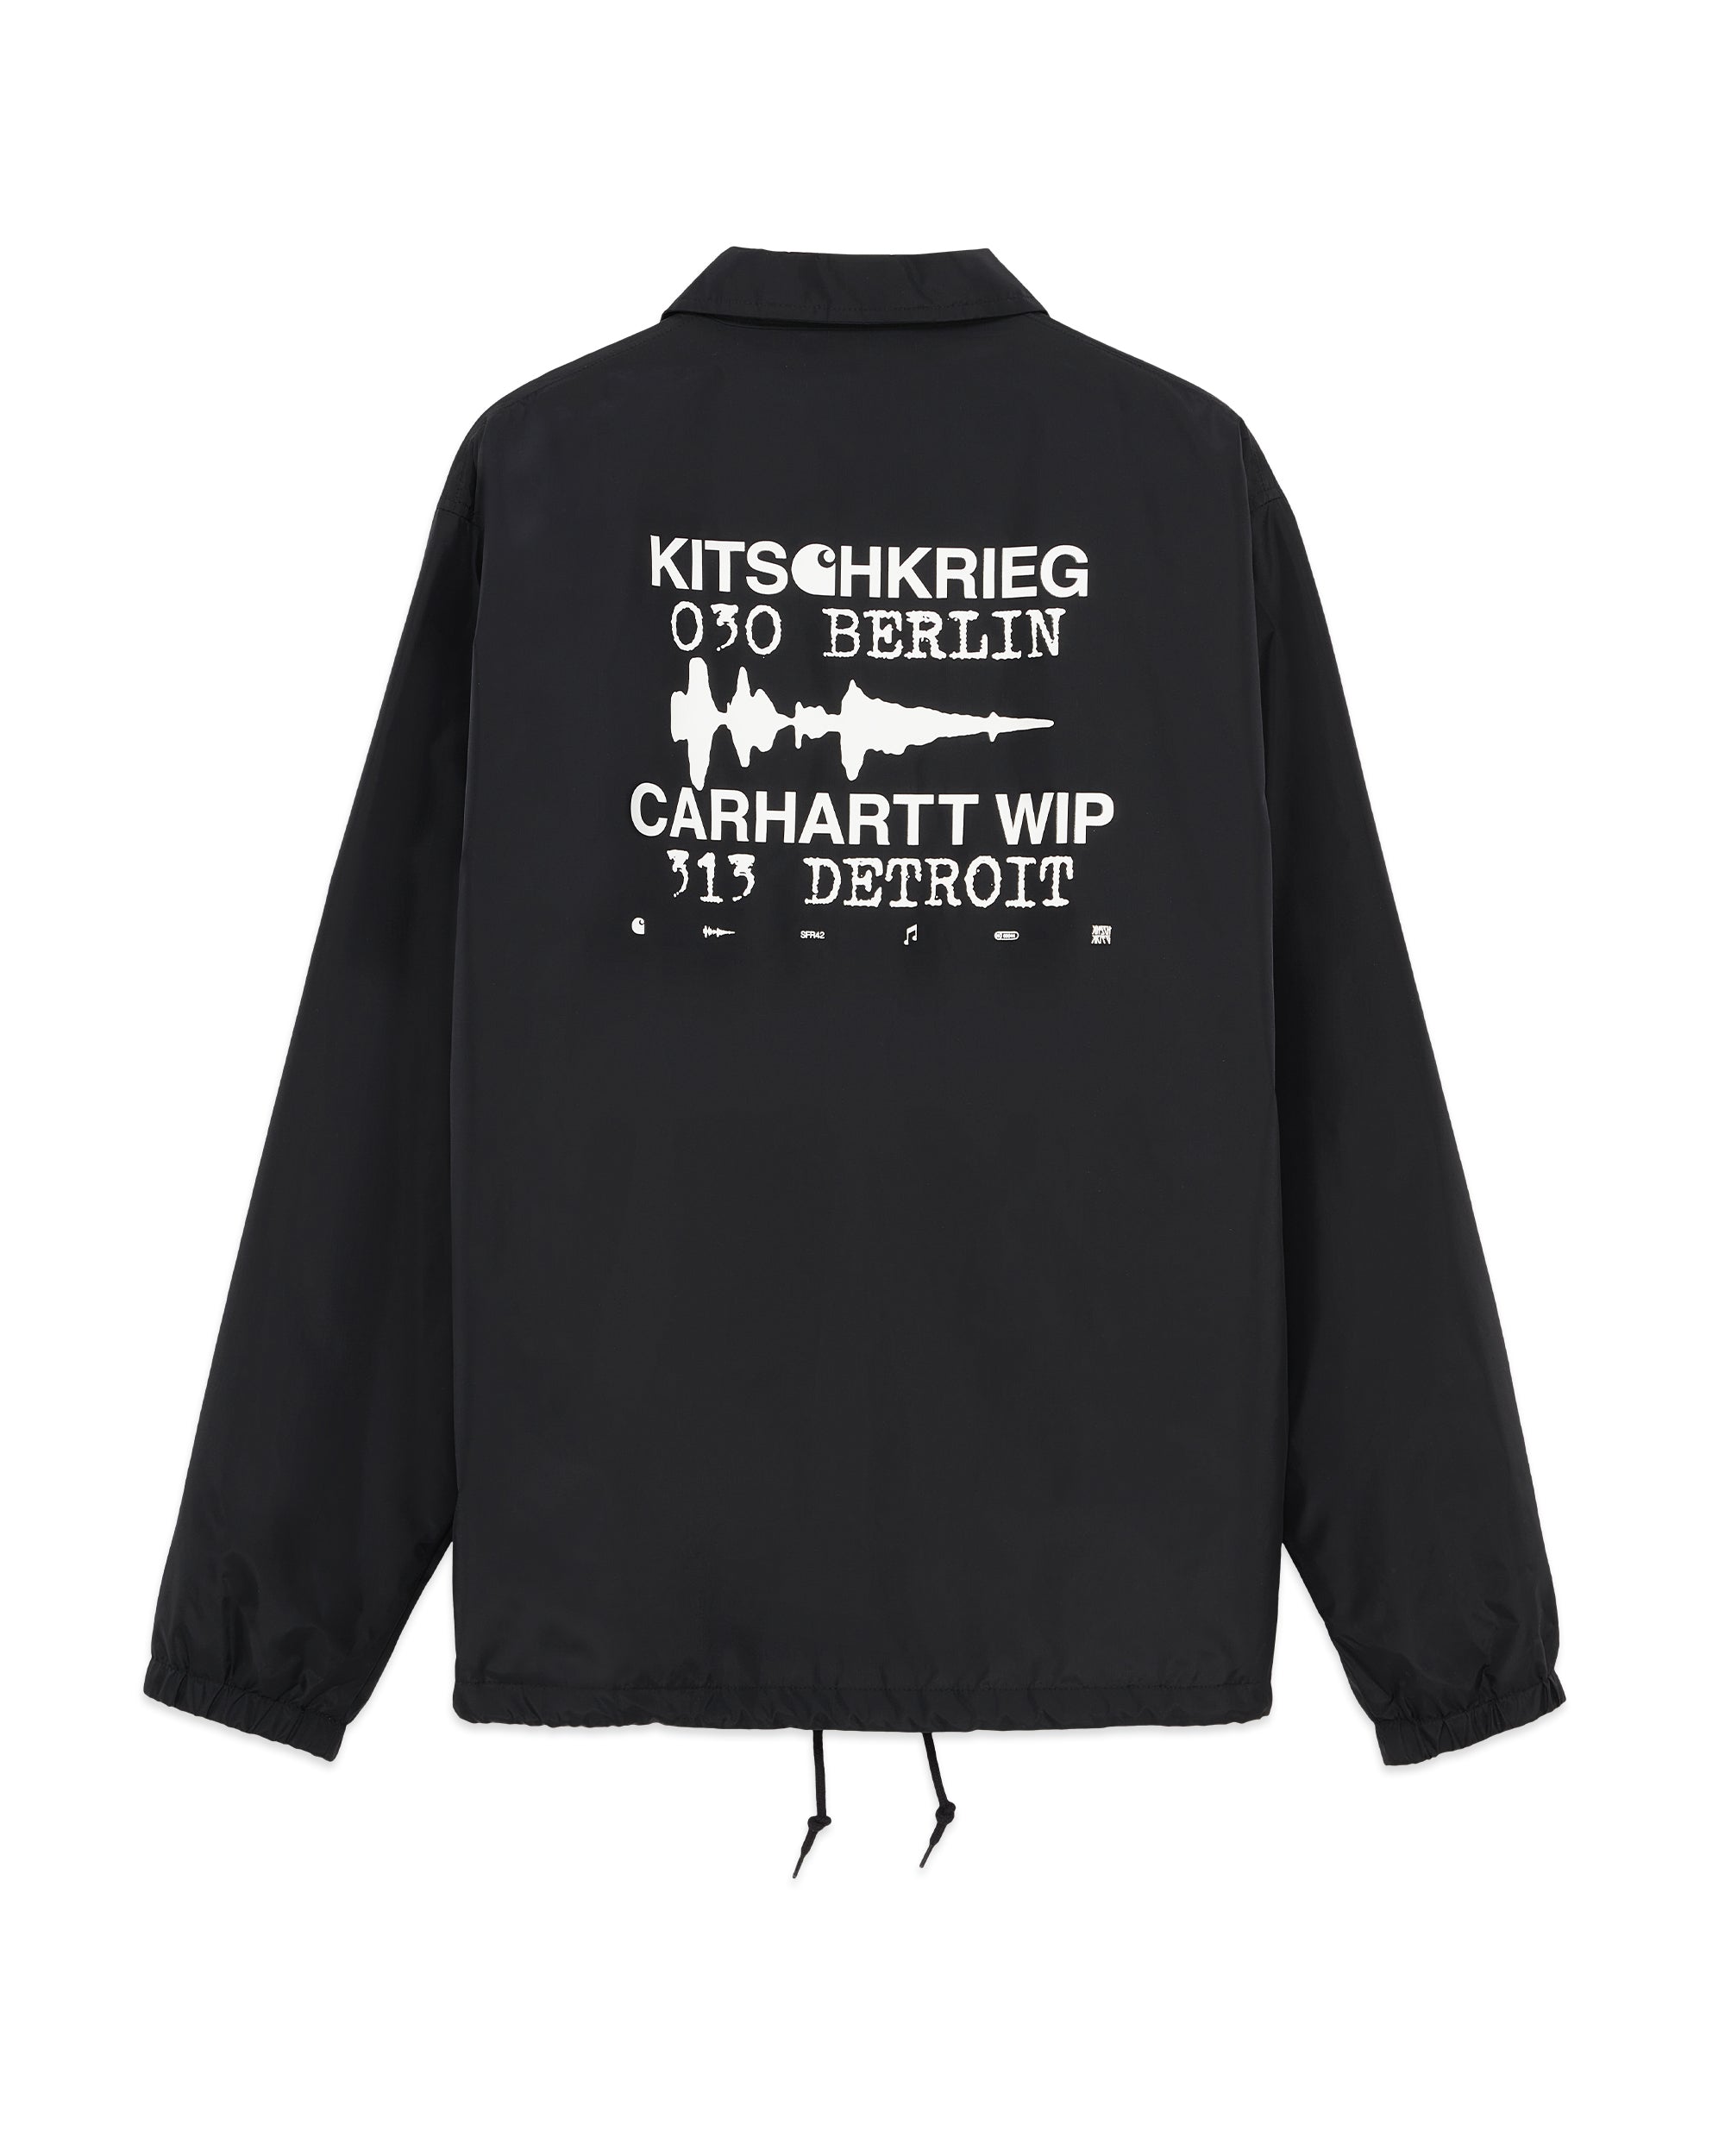 CARHARTT WIP × KITSCHKRIEG COACH JACKET